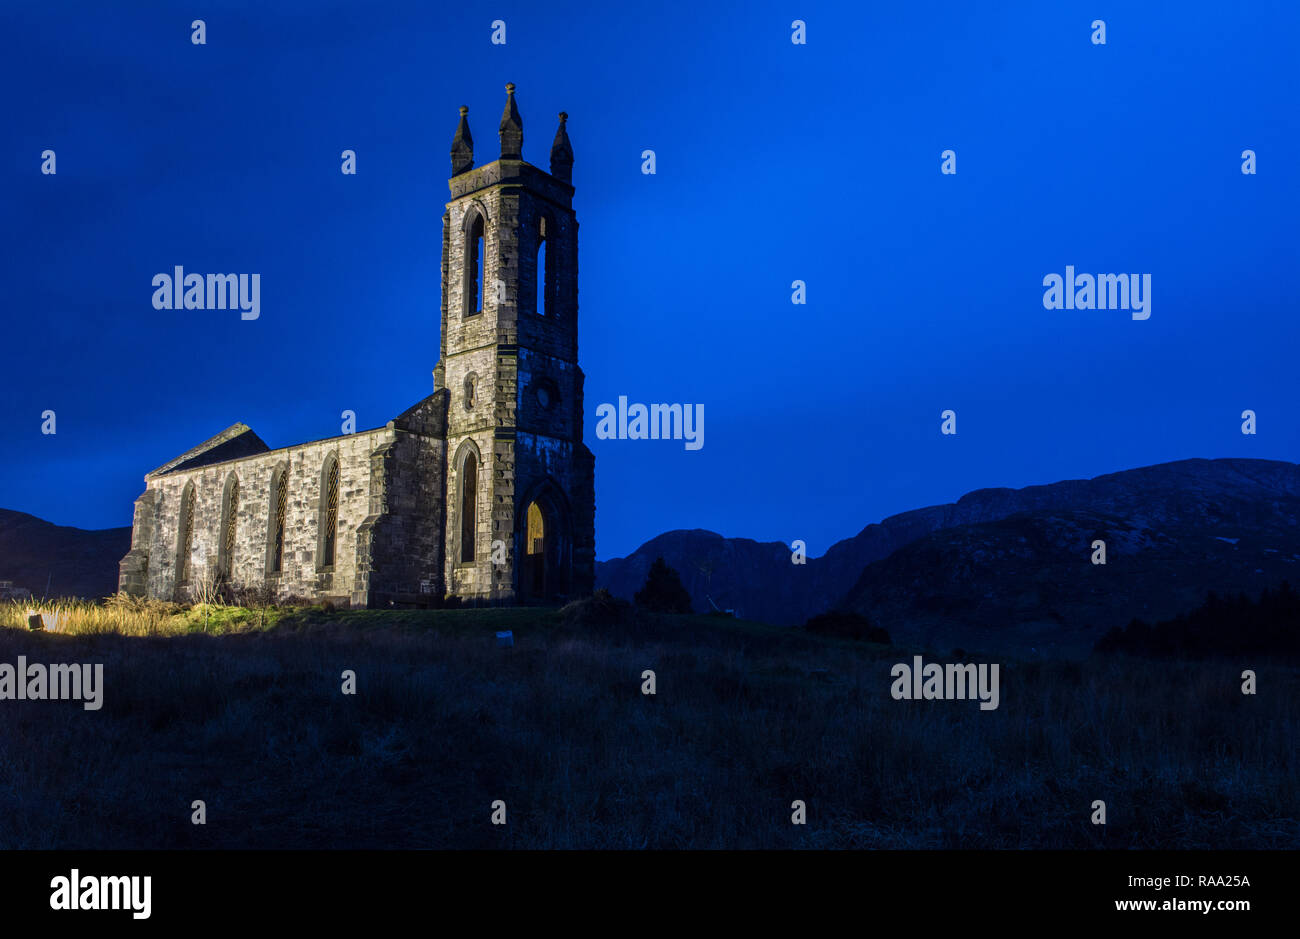 Ruined Church of Ireland in The Poisoned Glen Dunlewey Gweedore Donegal Ireland Europe Stock Photo